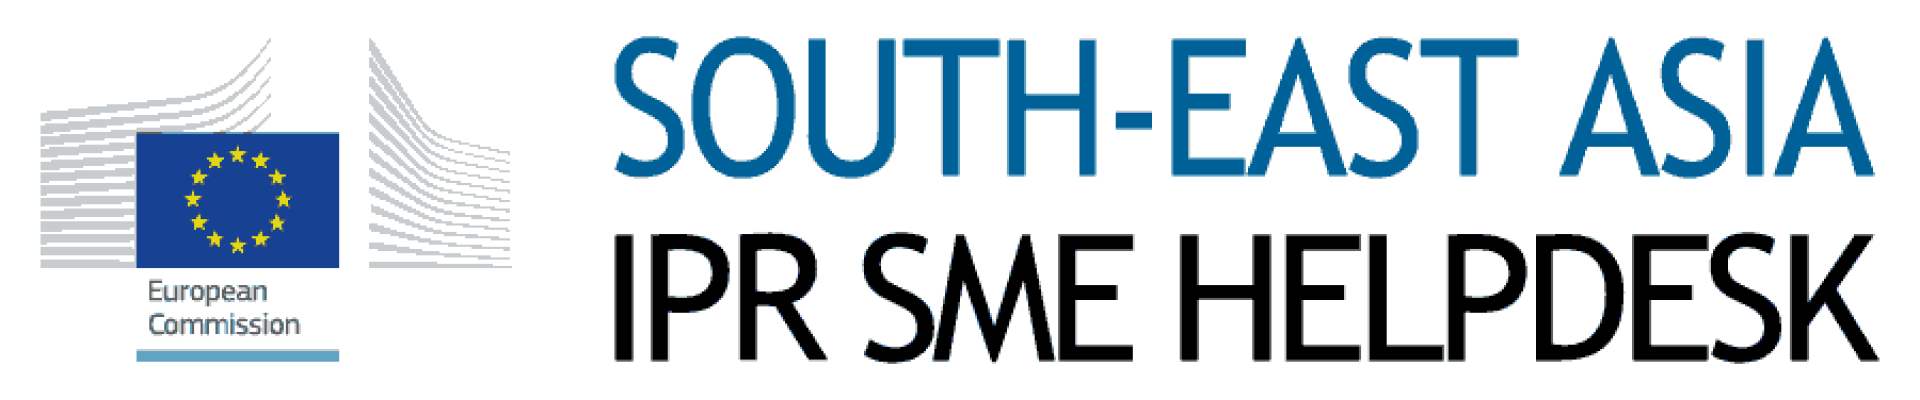 south-east-asia-ipr-sme-helpdesk-vector-logo